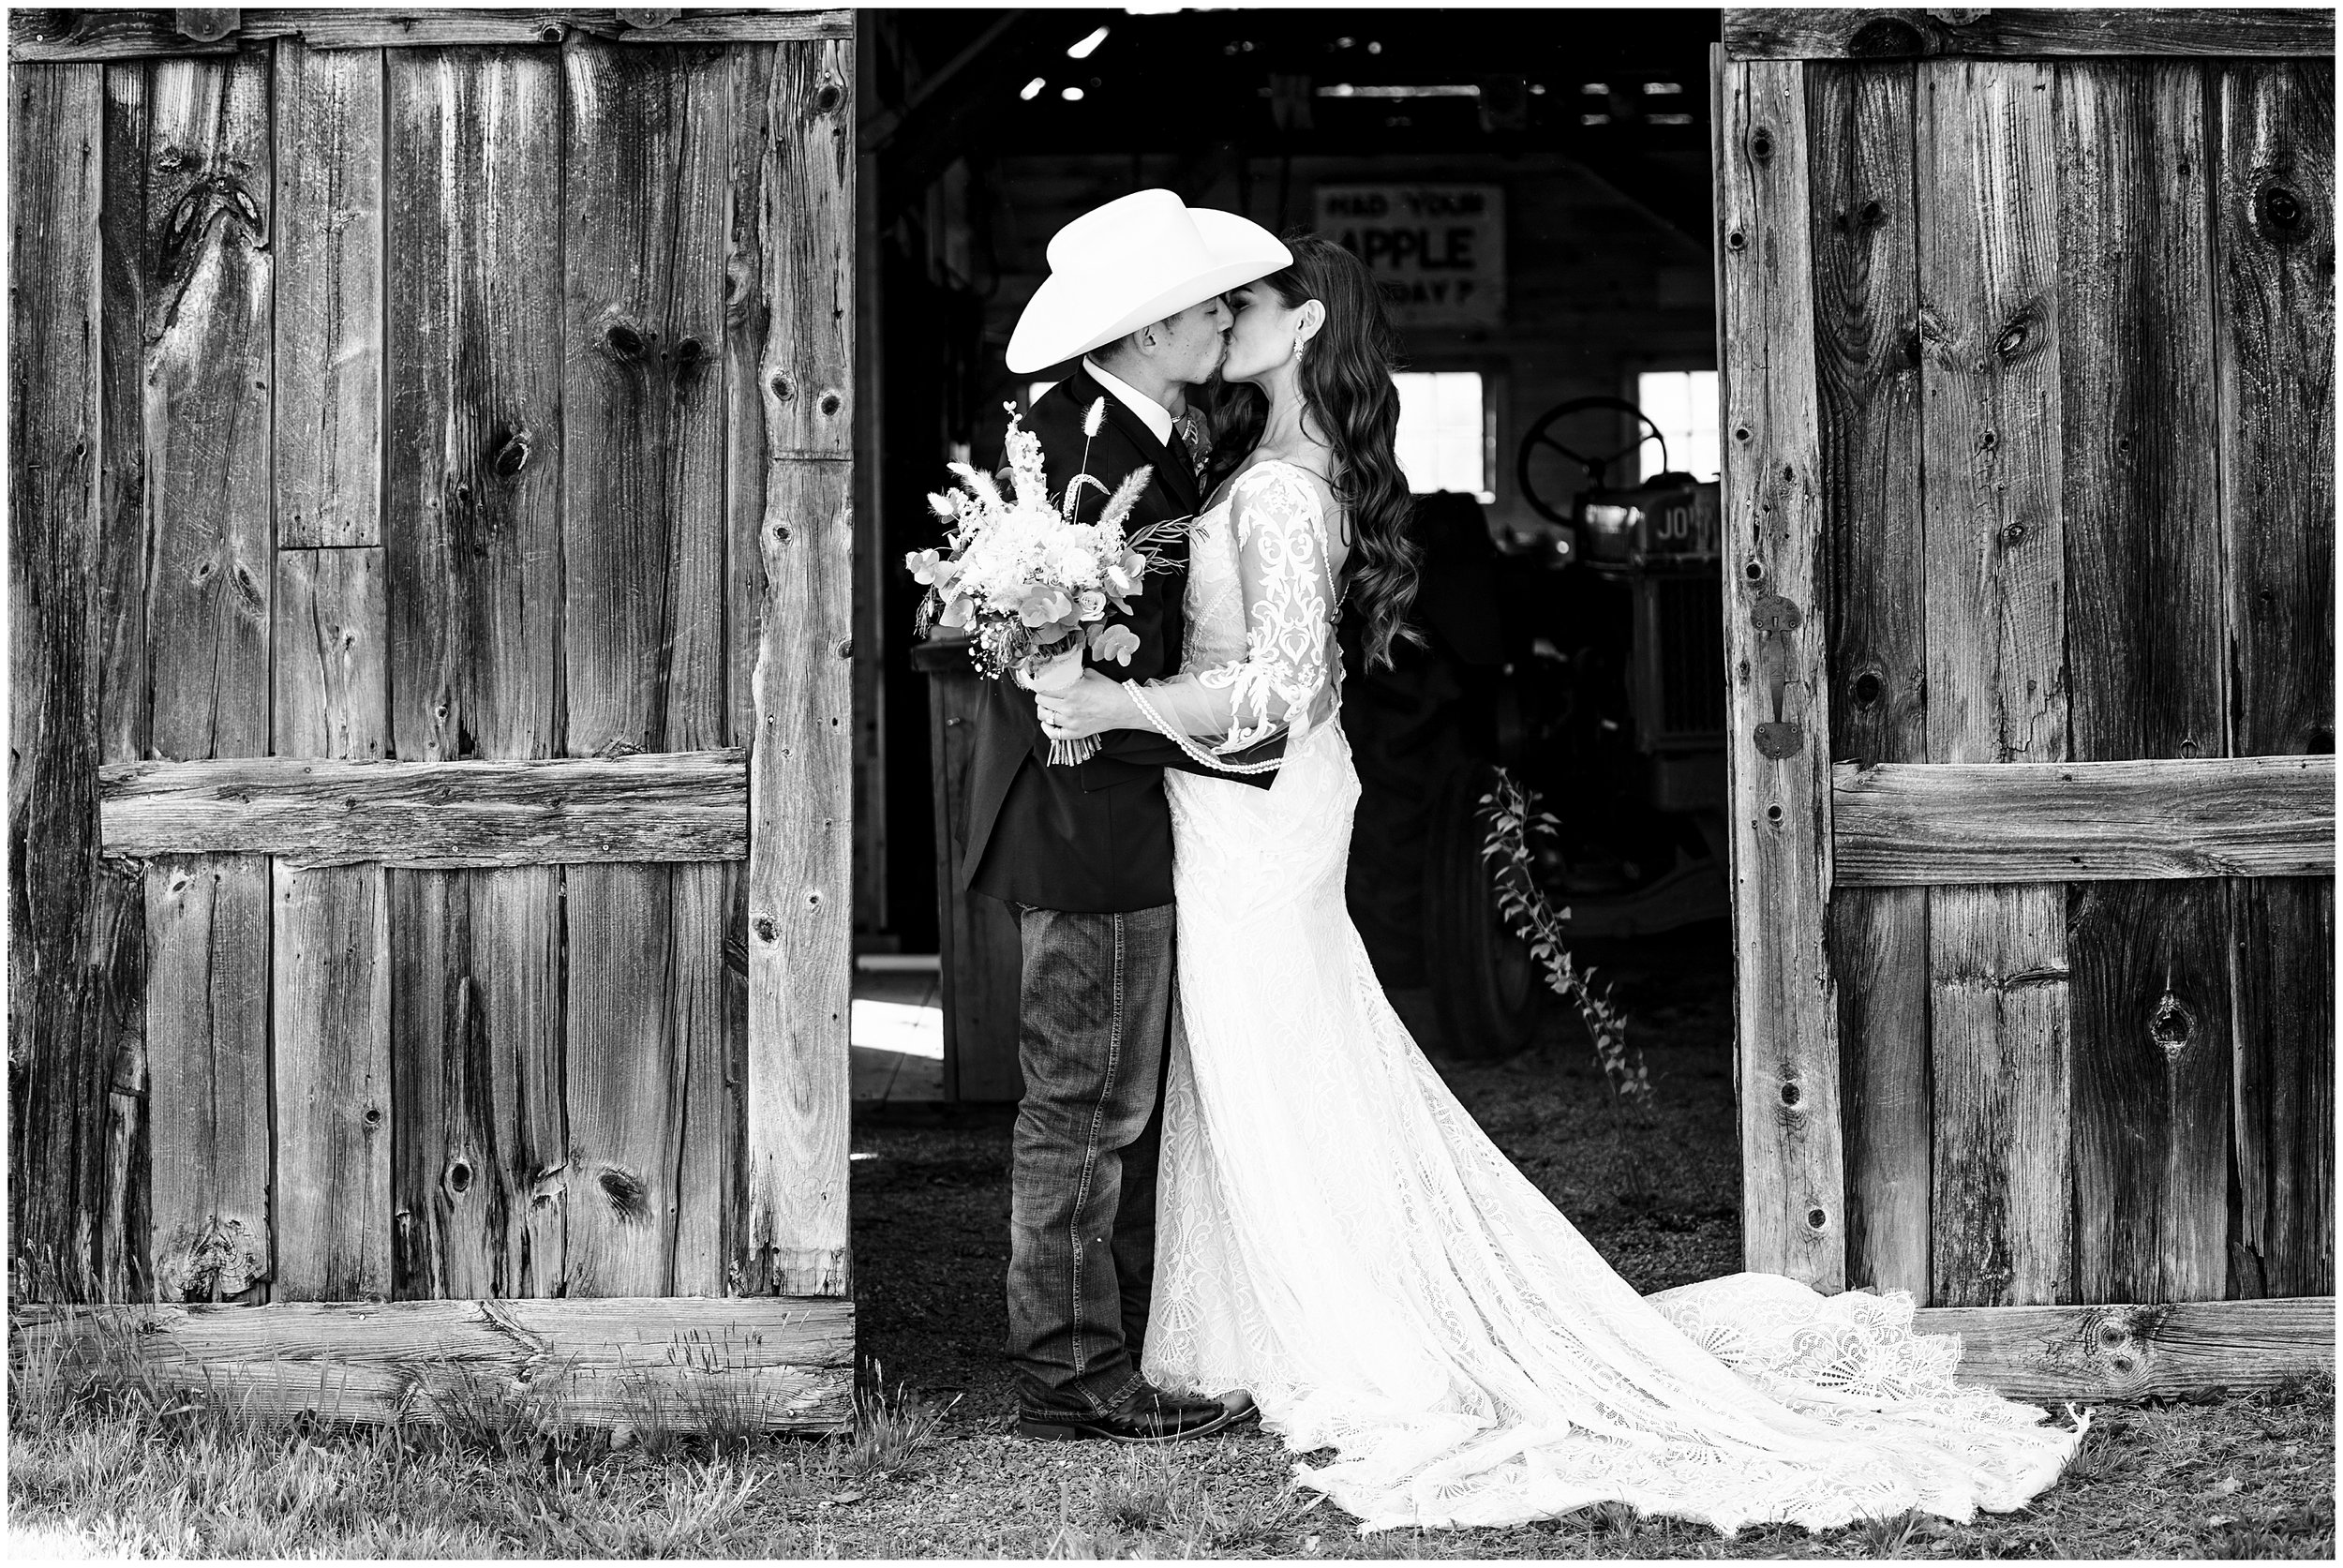 Randall Orchard Wedding Photographers, Standish Maine Wedding Photographer, Two Adventurous Souls- 051323_0037.jpg